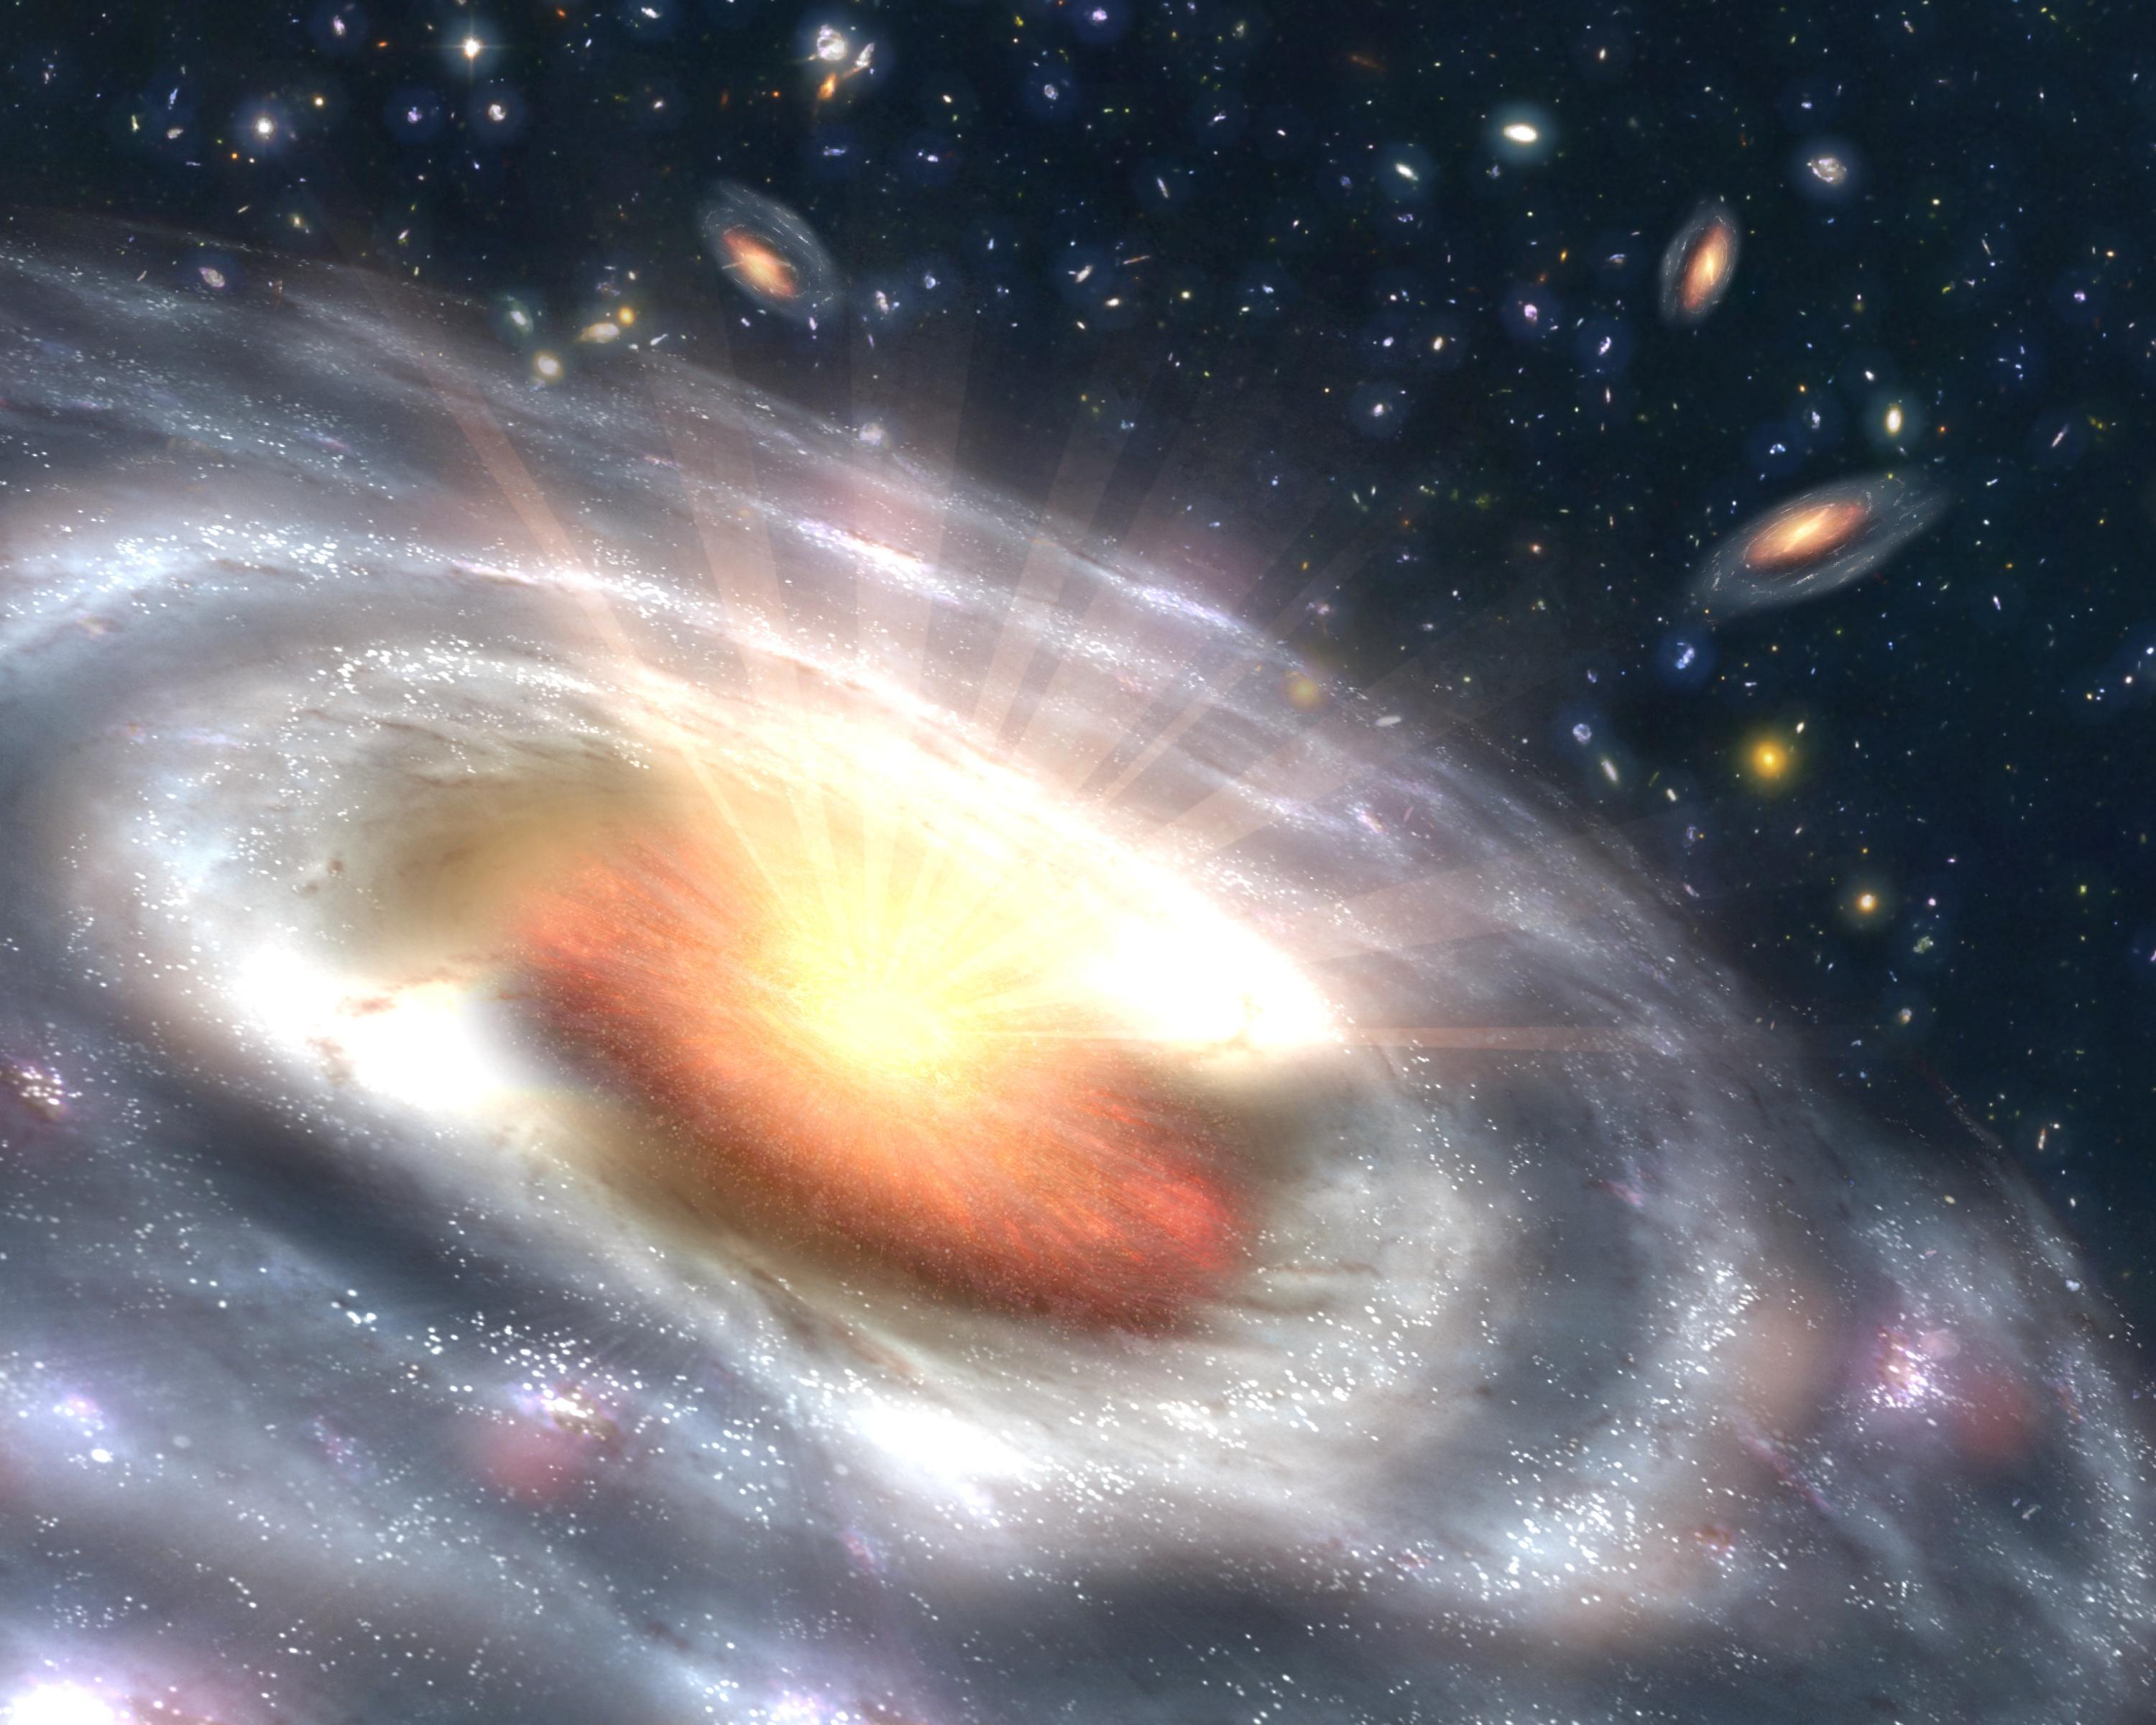 james webb space telescope suggests supermassive black holes grew from heavy cosmic 'seeds'